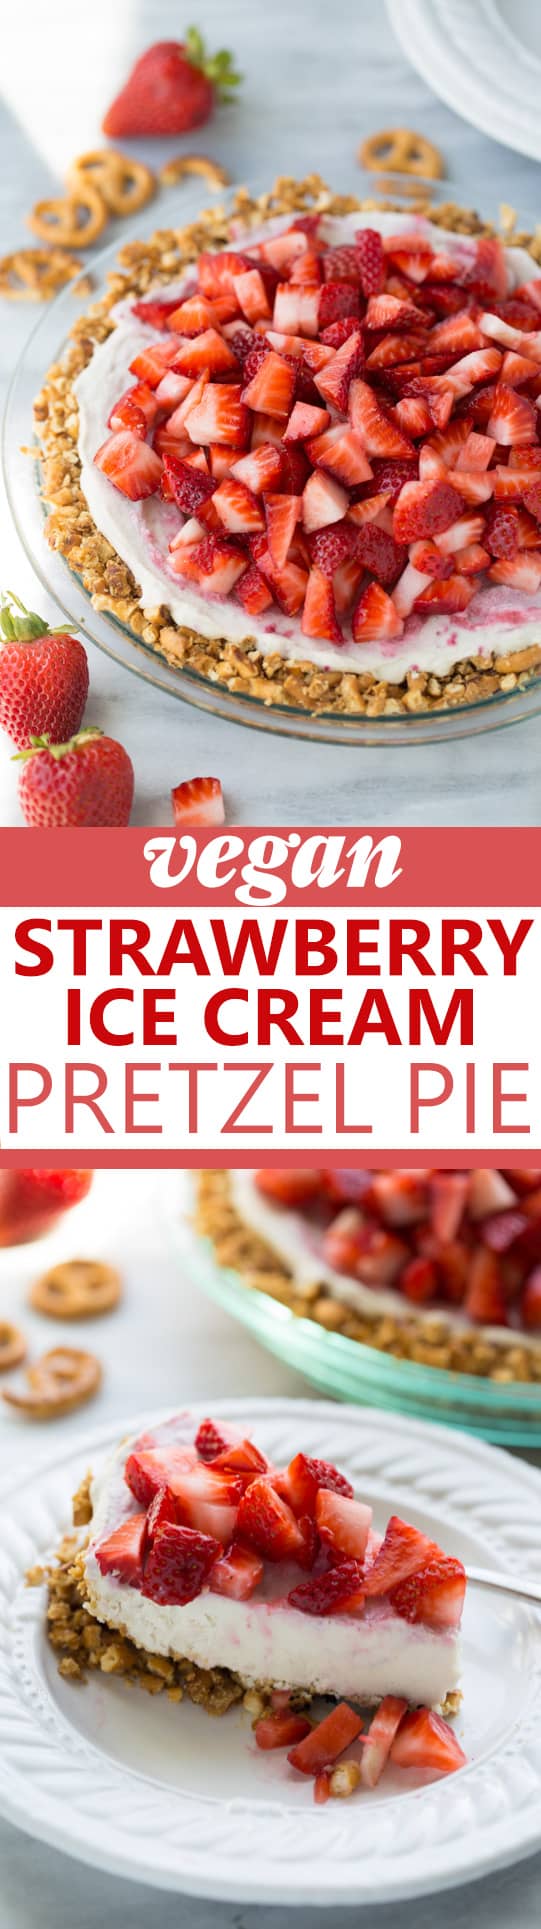 Vegan Strawberry Ice Cream Pretzel Pie! Gluten-free pretzel crust with an easy, homemade dairy-free cashew ice cream and fresh strawberries!